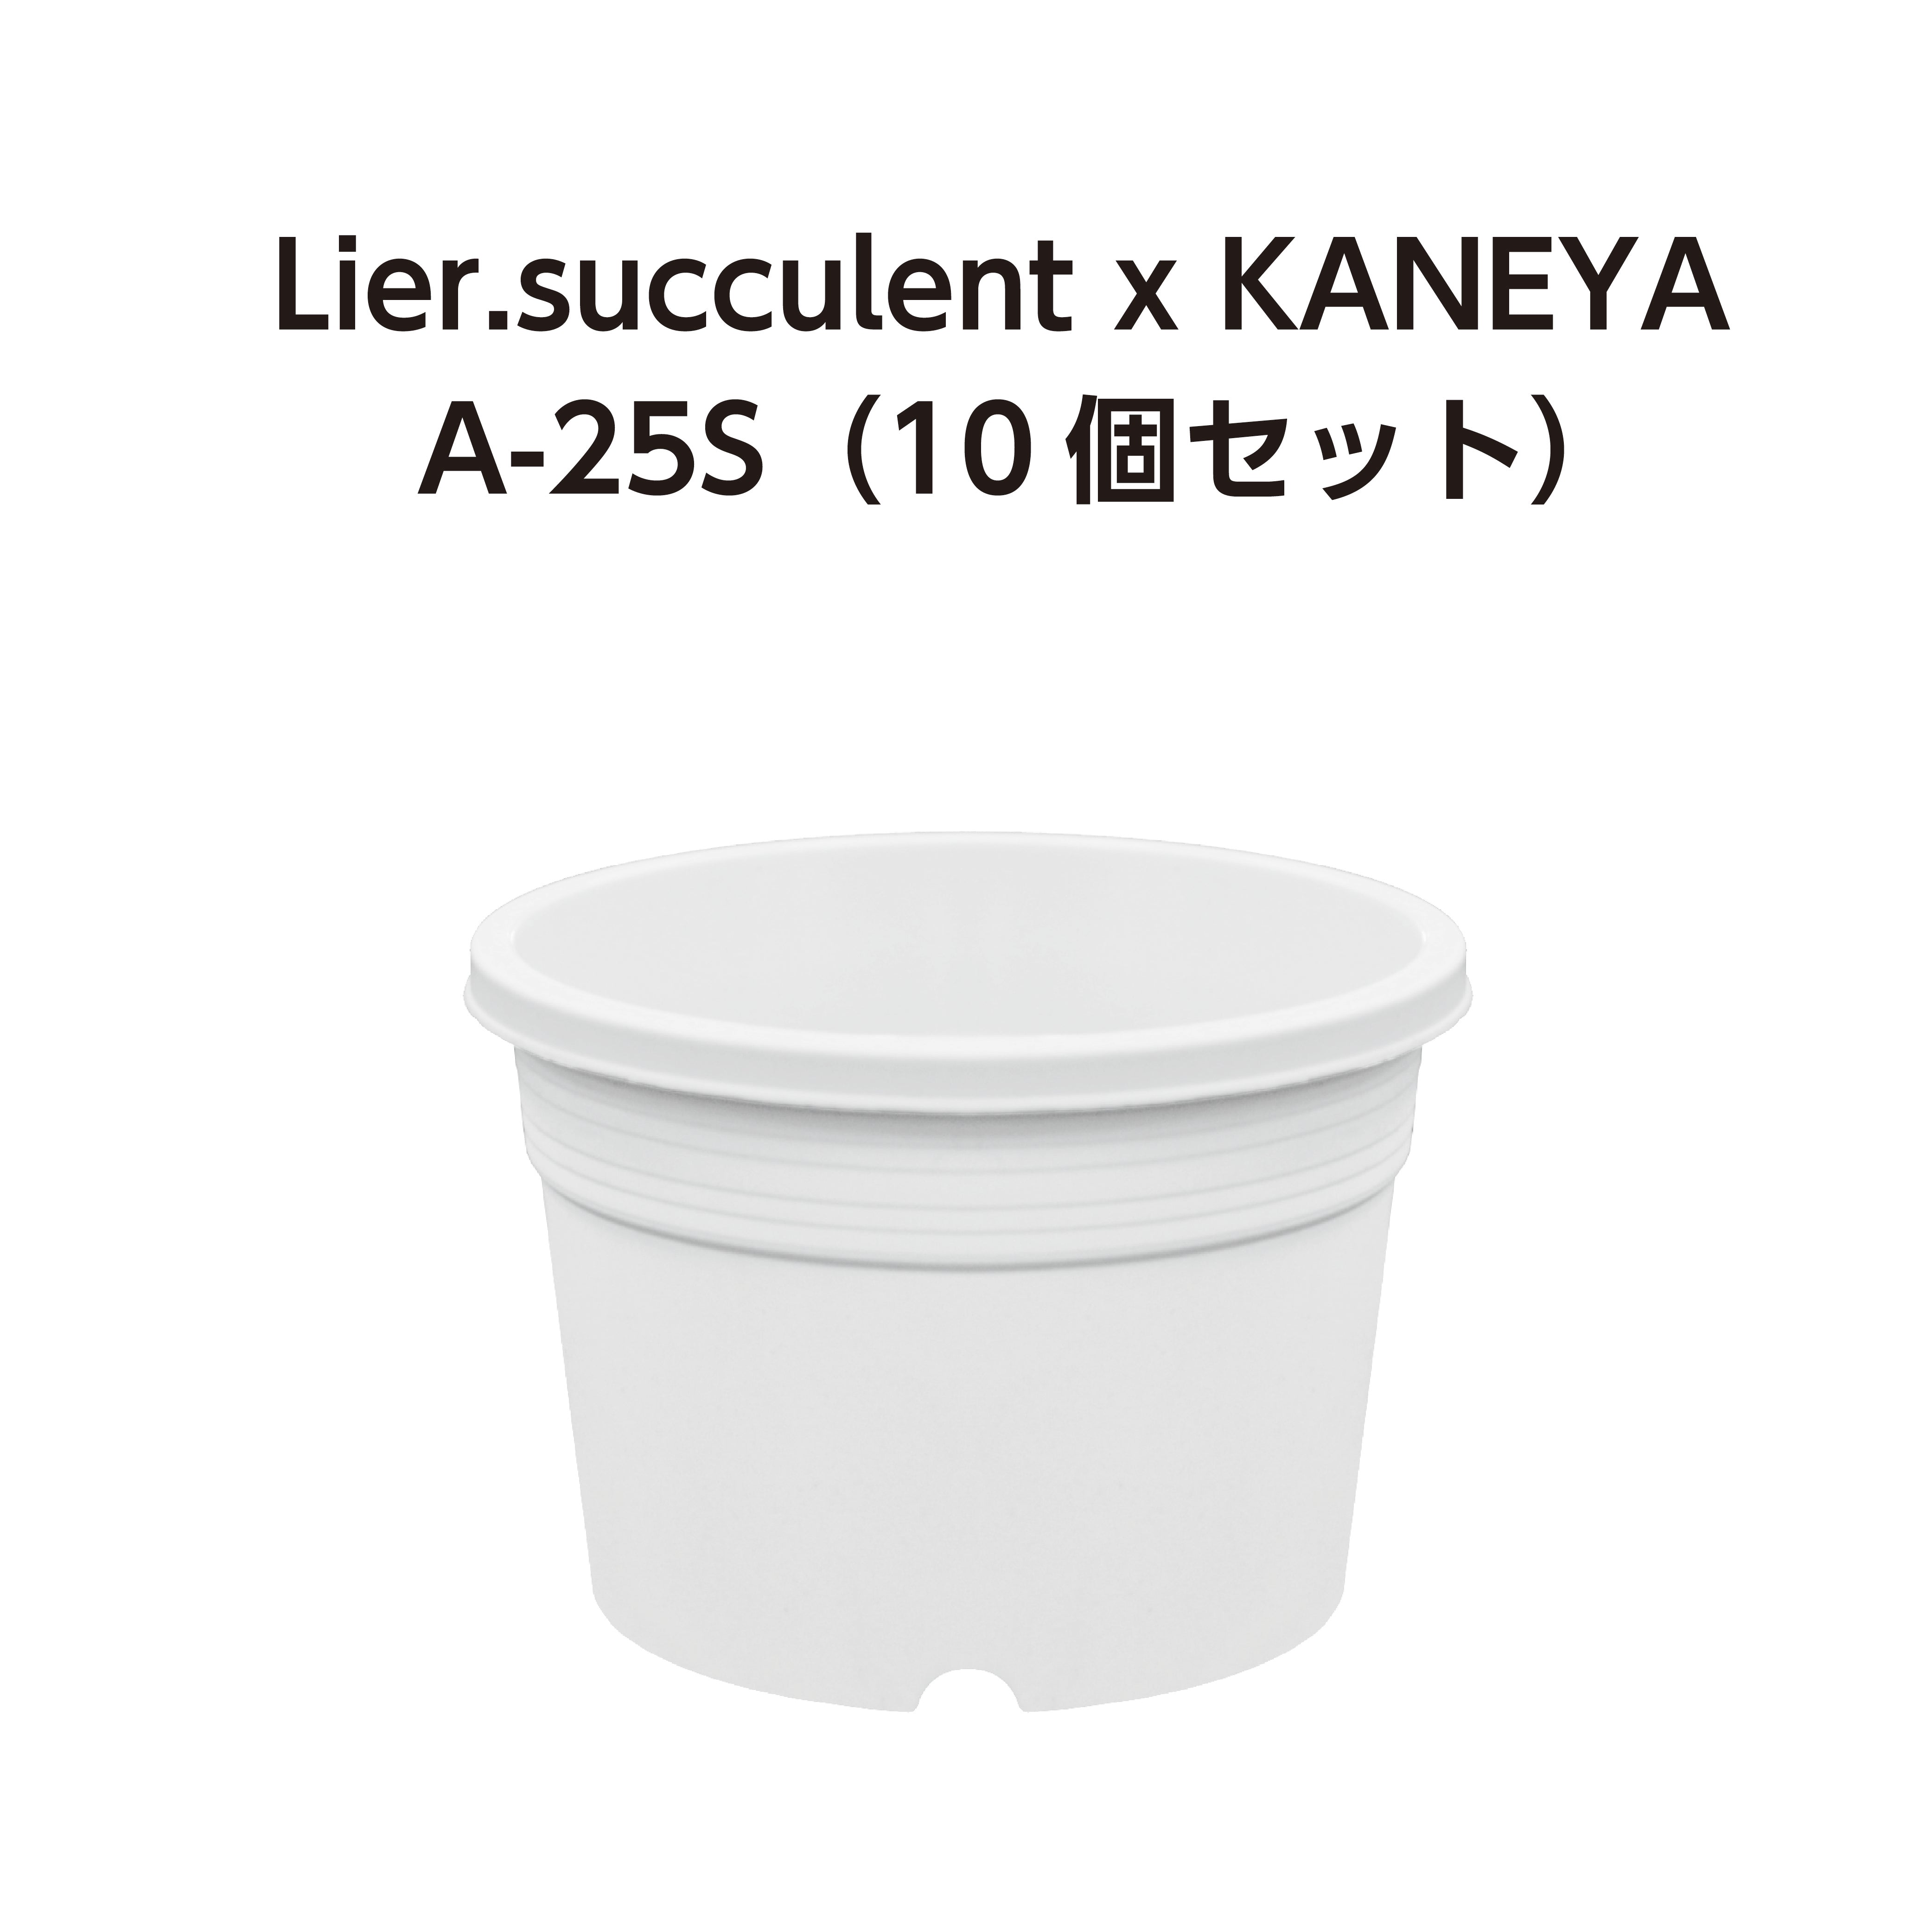 A-25S 白 10個セット  (2.5号鉢) (リエールサキュレントコラボ商品)